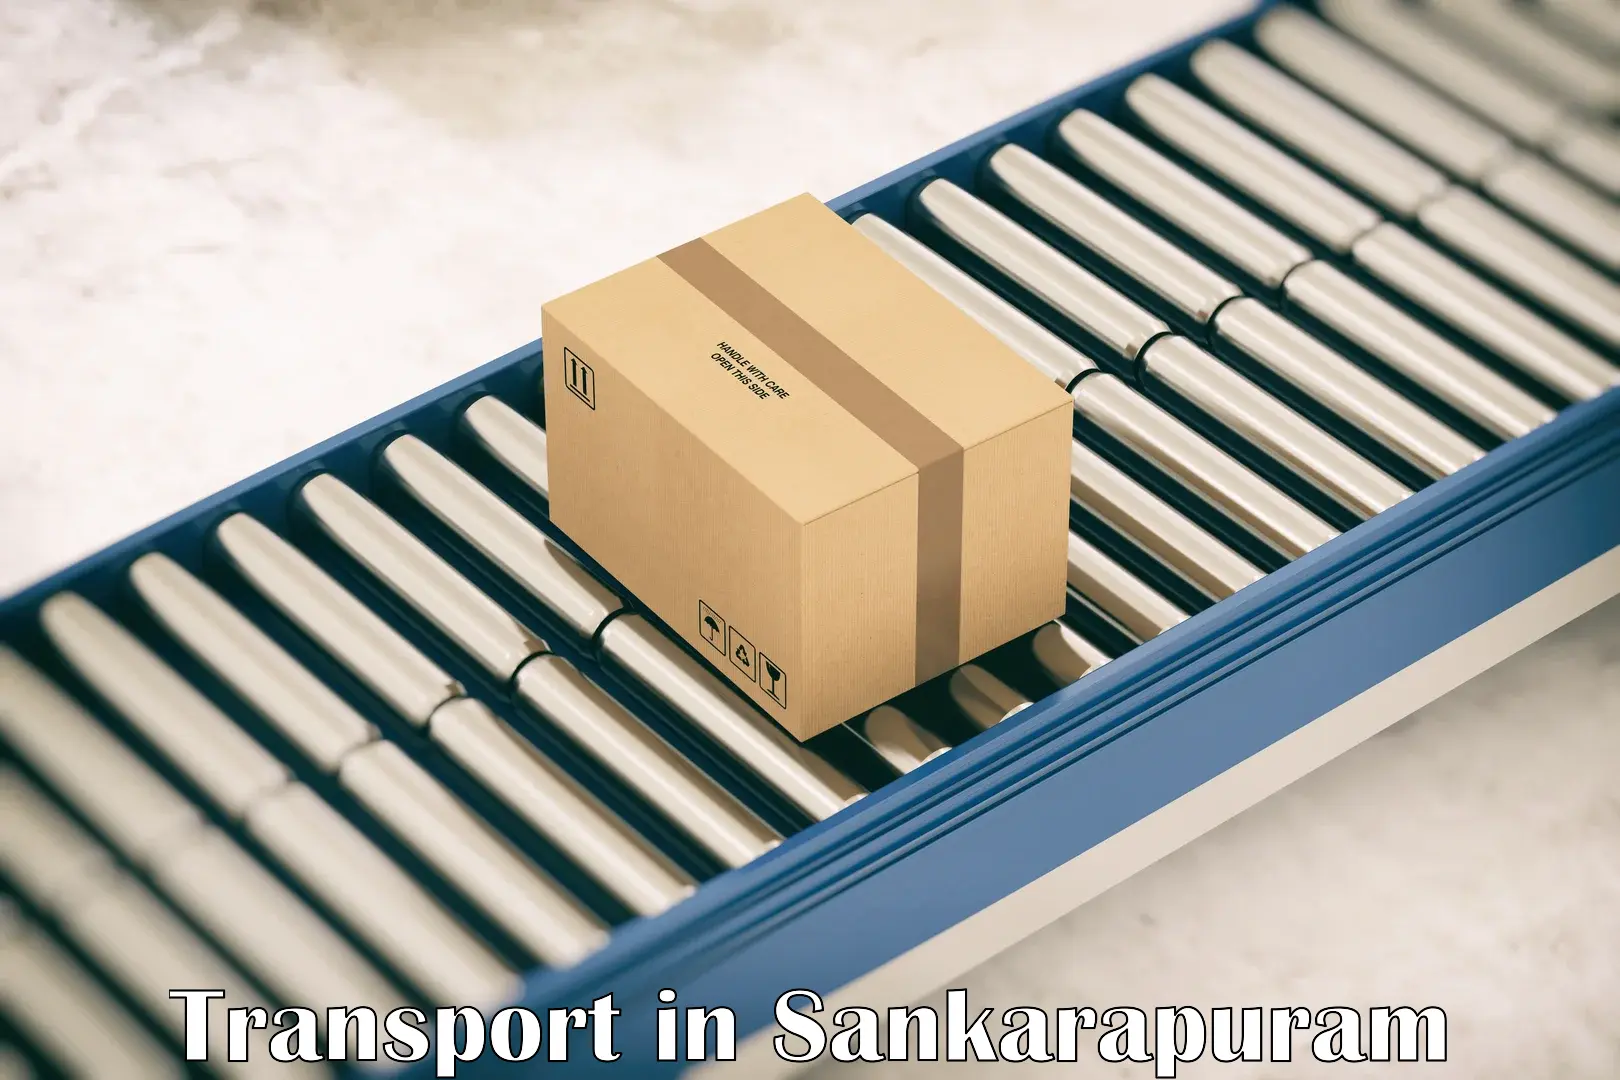 Cargo transport services in Sankarapuram